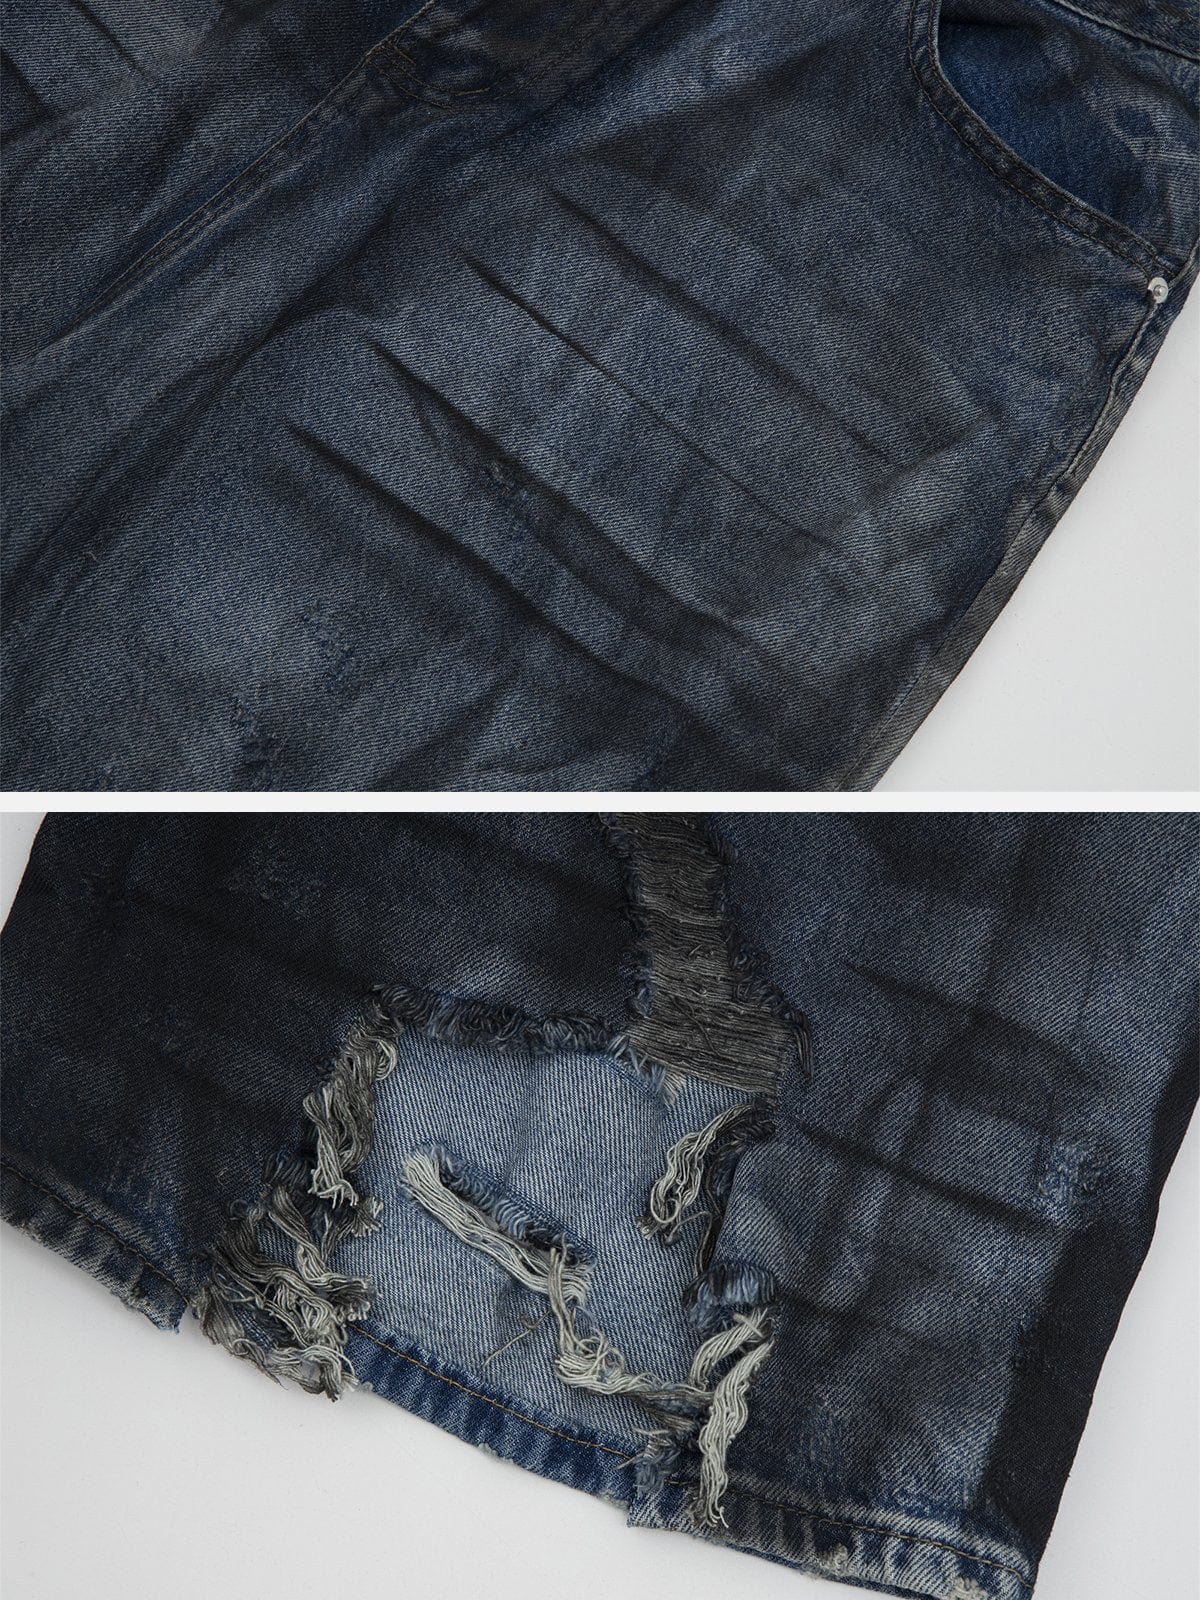 NEV Irregular Holes Pleated Jeans